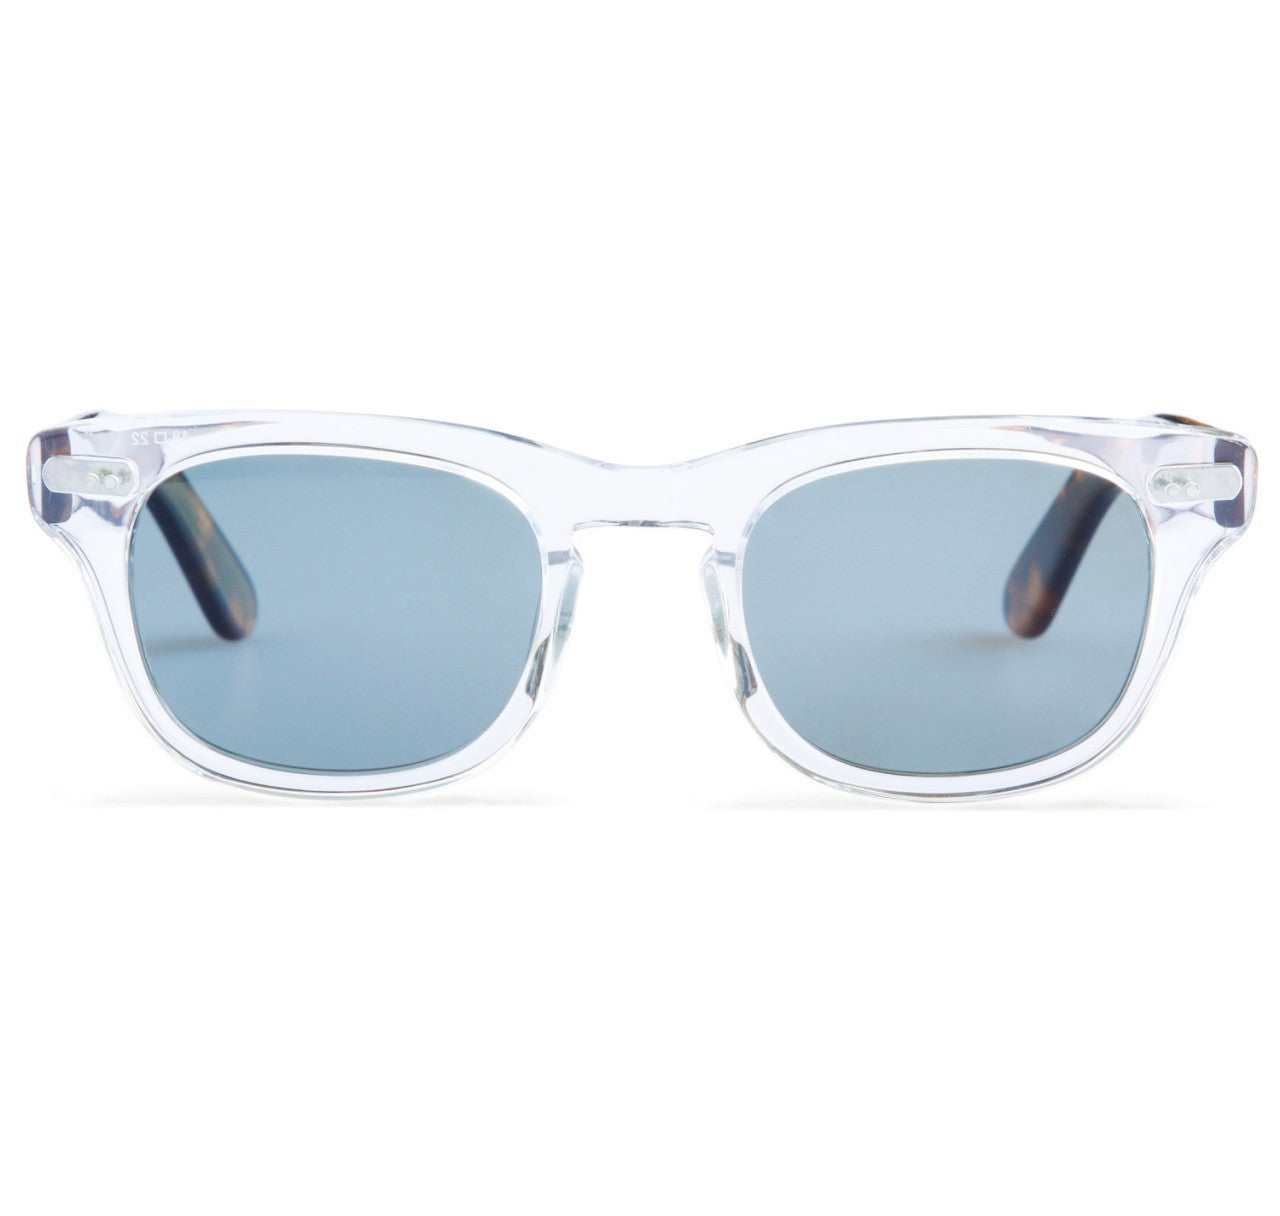 Shuron Sidewinder Crystal Tortoiseshell Sunglasses